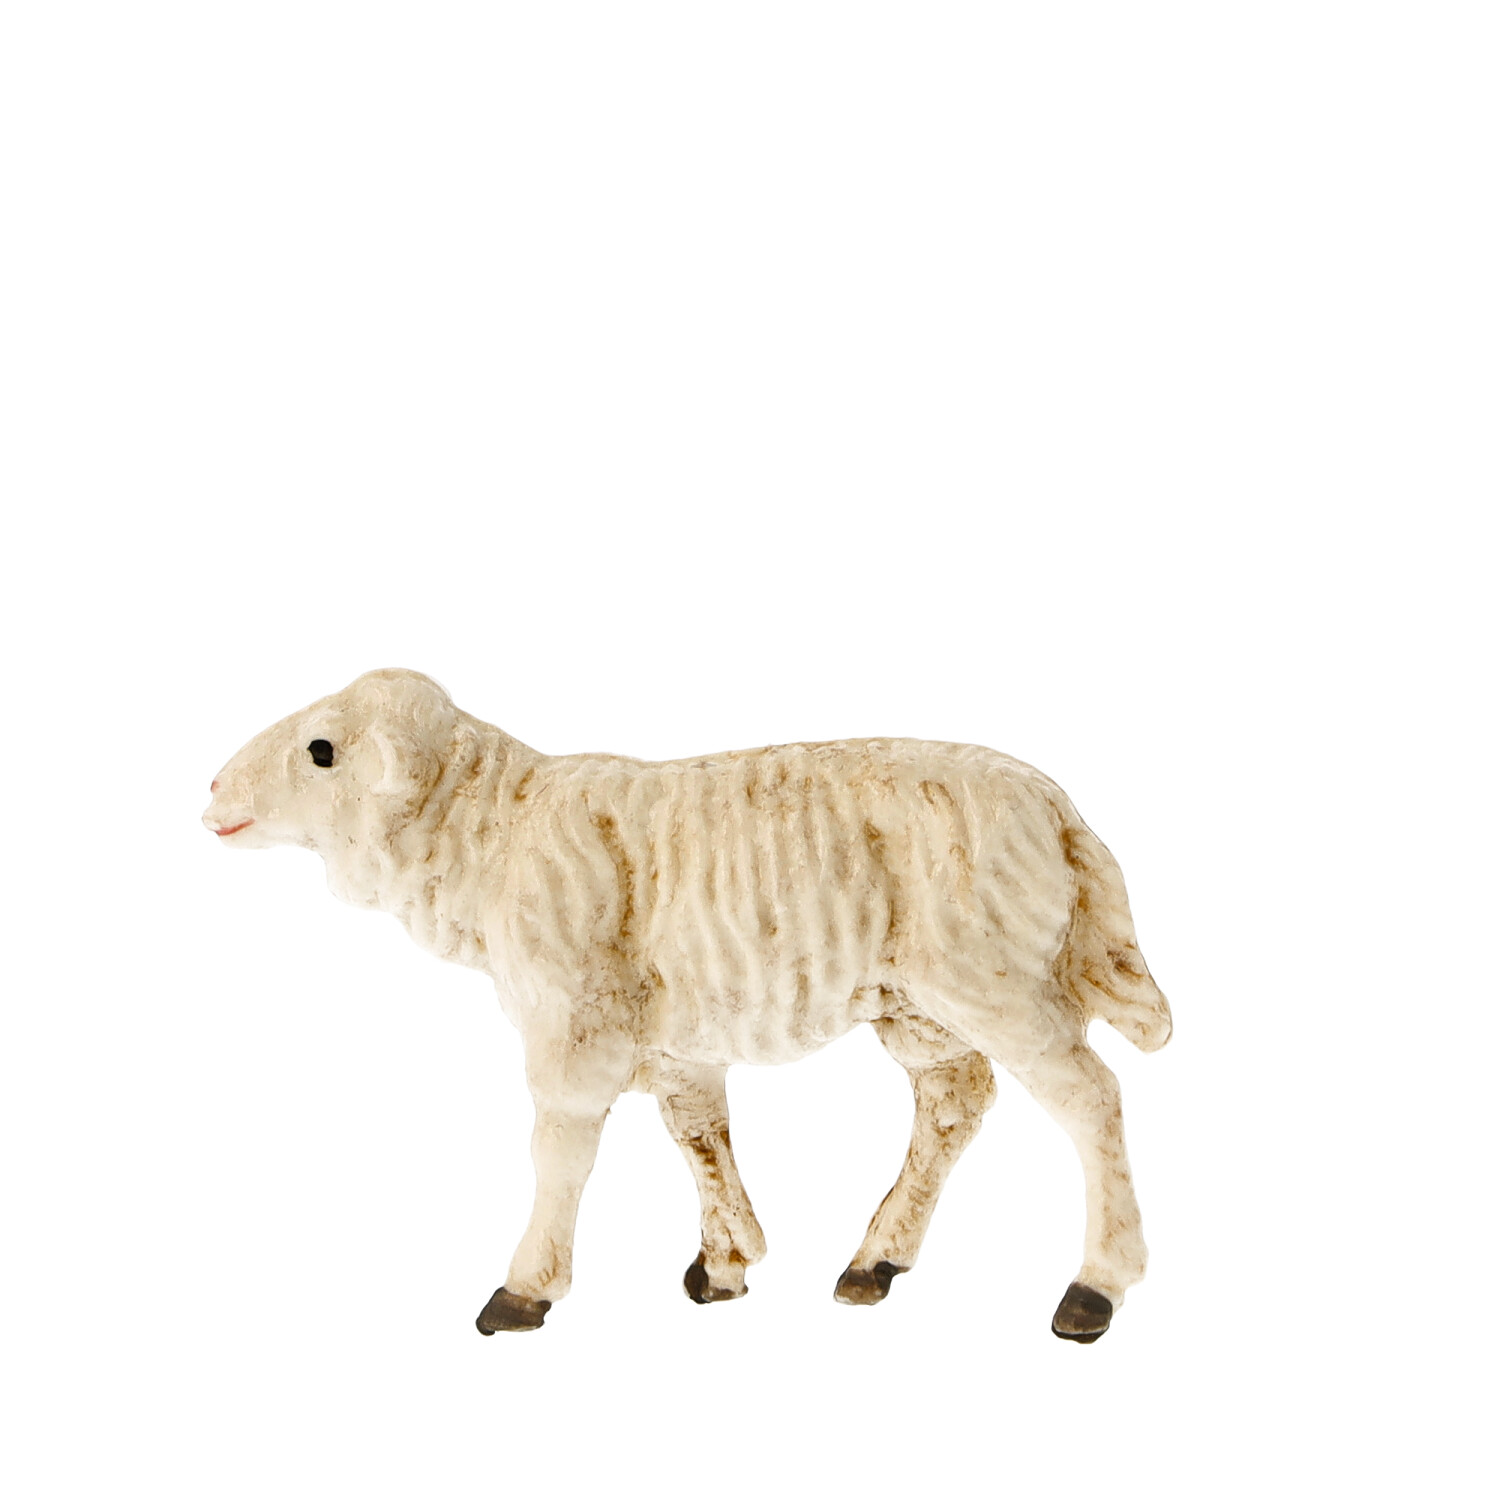 Schaf geradeaus - Marolin Plastik - Krippenfigur aus Kunststoff - made in Germany